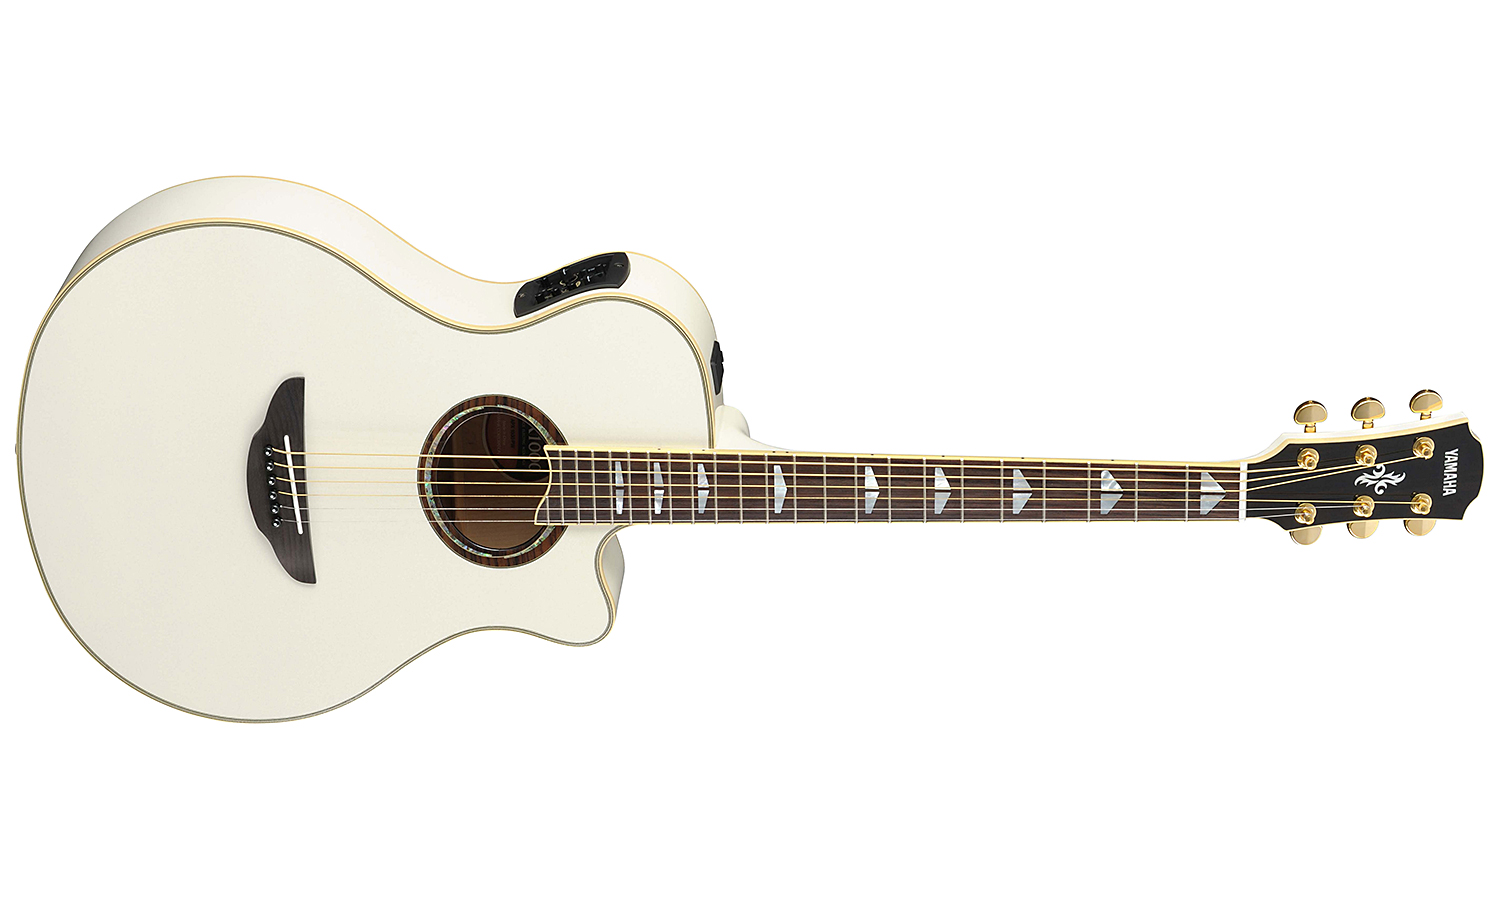 Yamaha Apx1000 Pearl White - Pearl White - Elektroakustische Gitarre - Variation 1